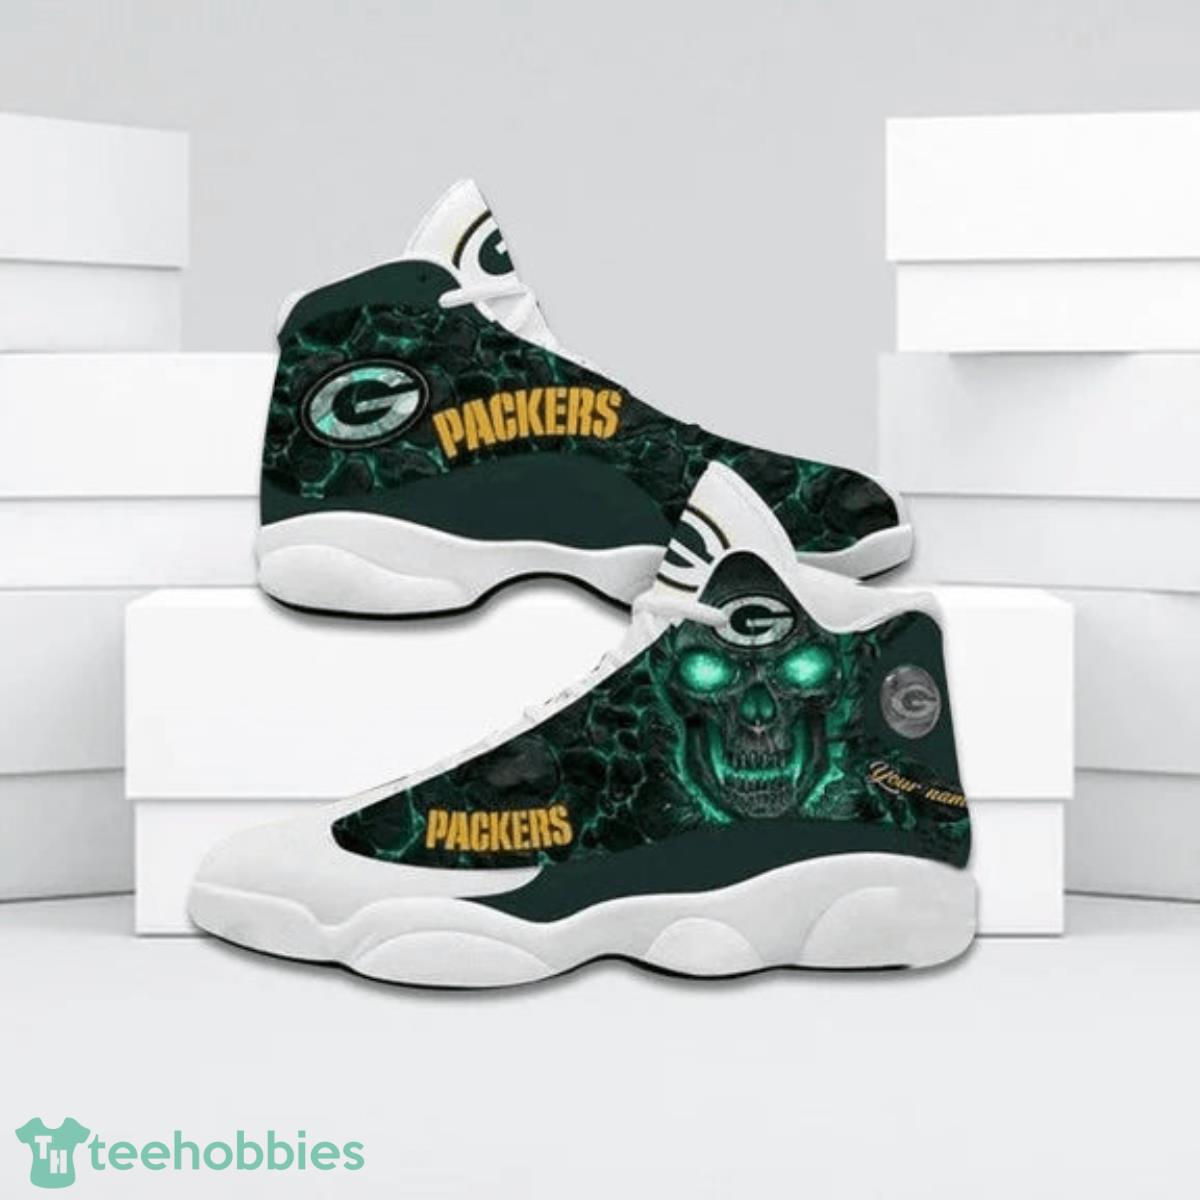 Green Bay Packers NFL Personalized Air Jordan 13 Sport Shoes - Growkoc